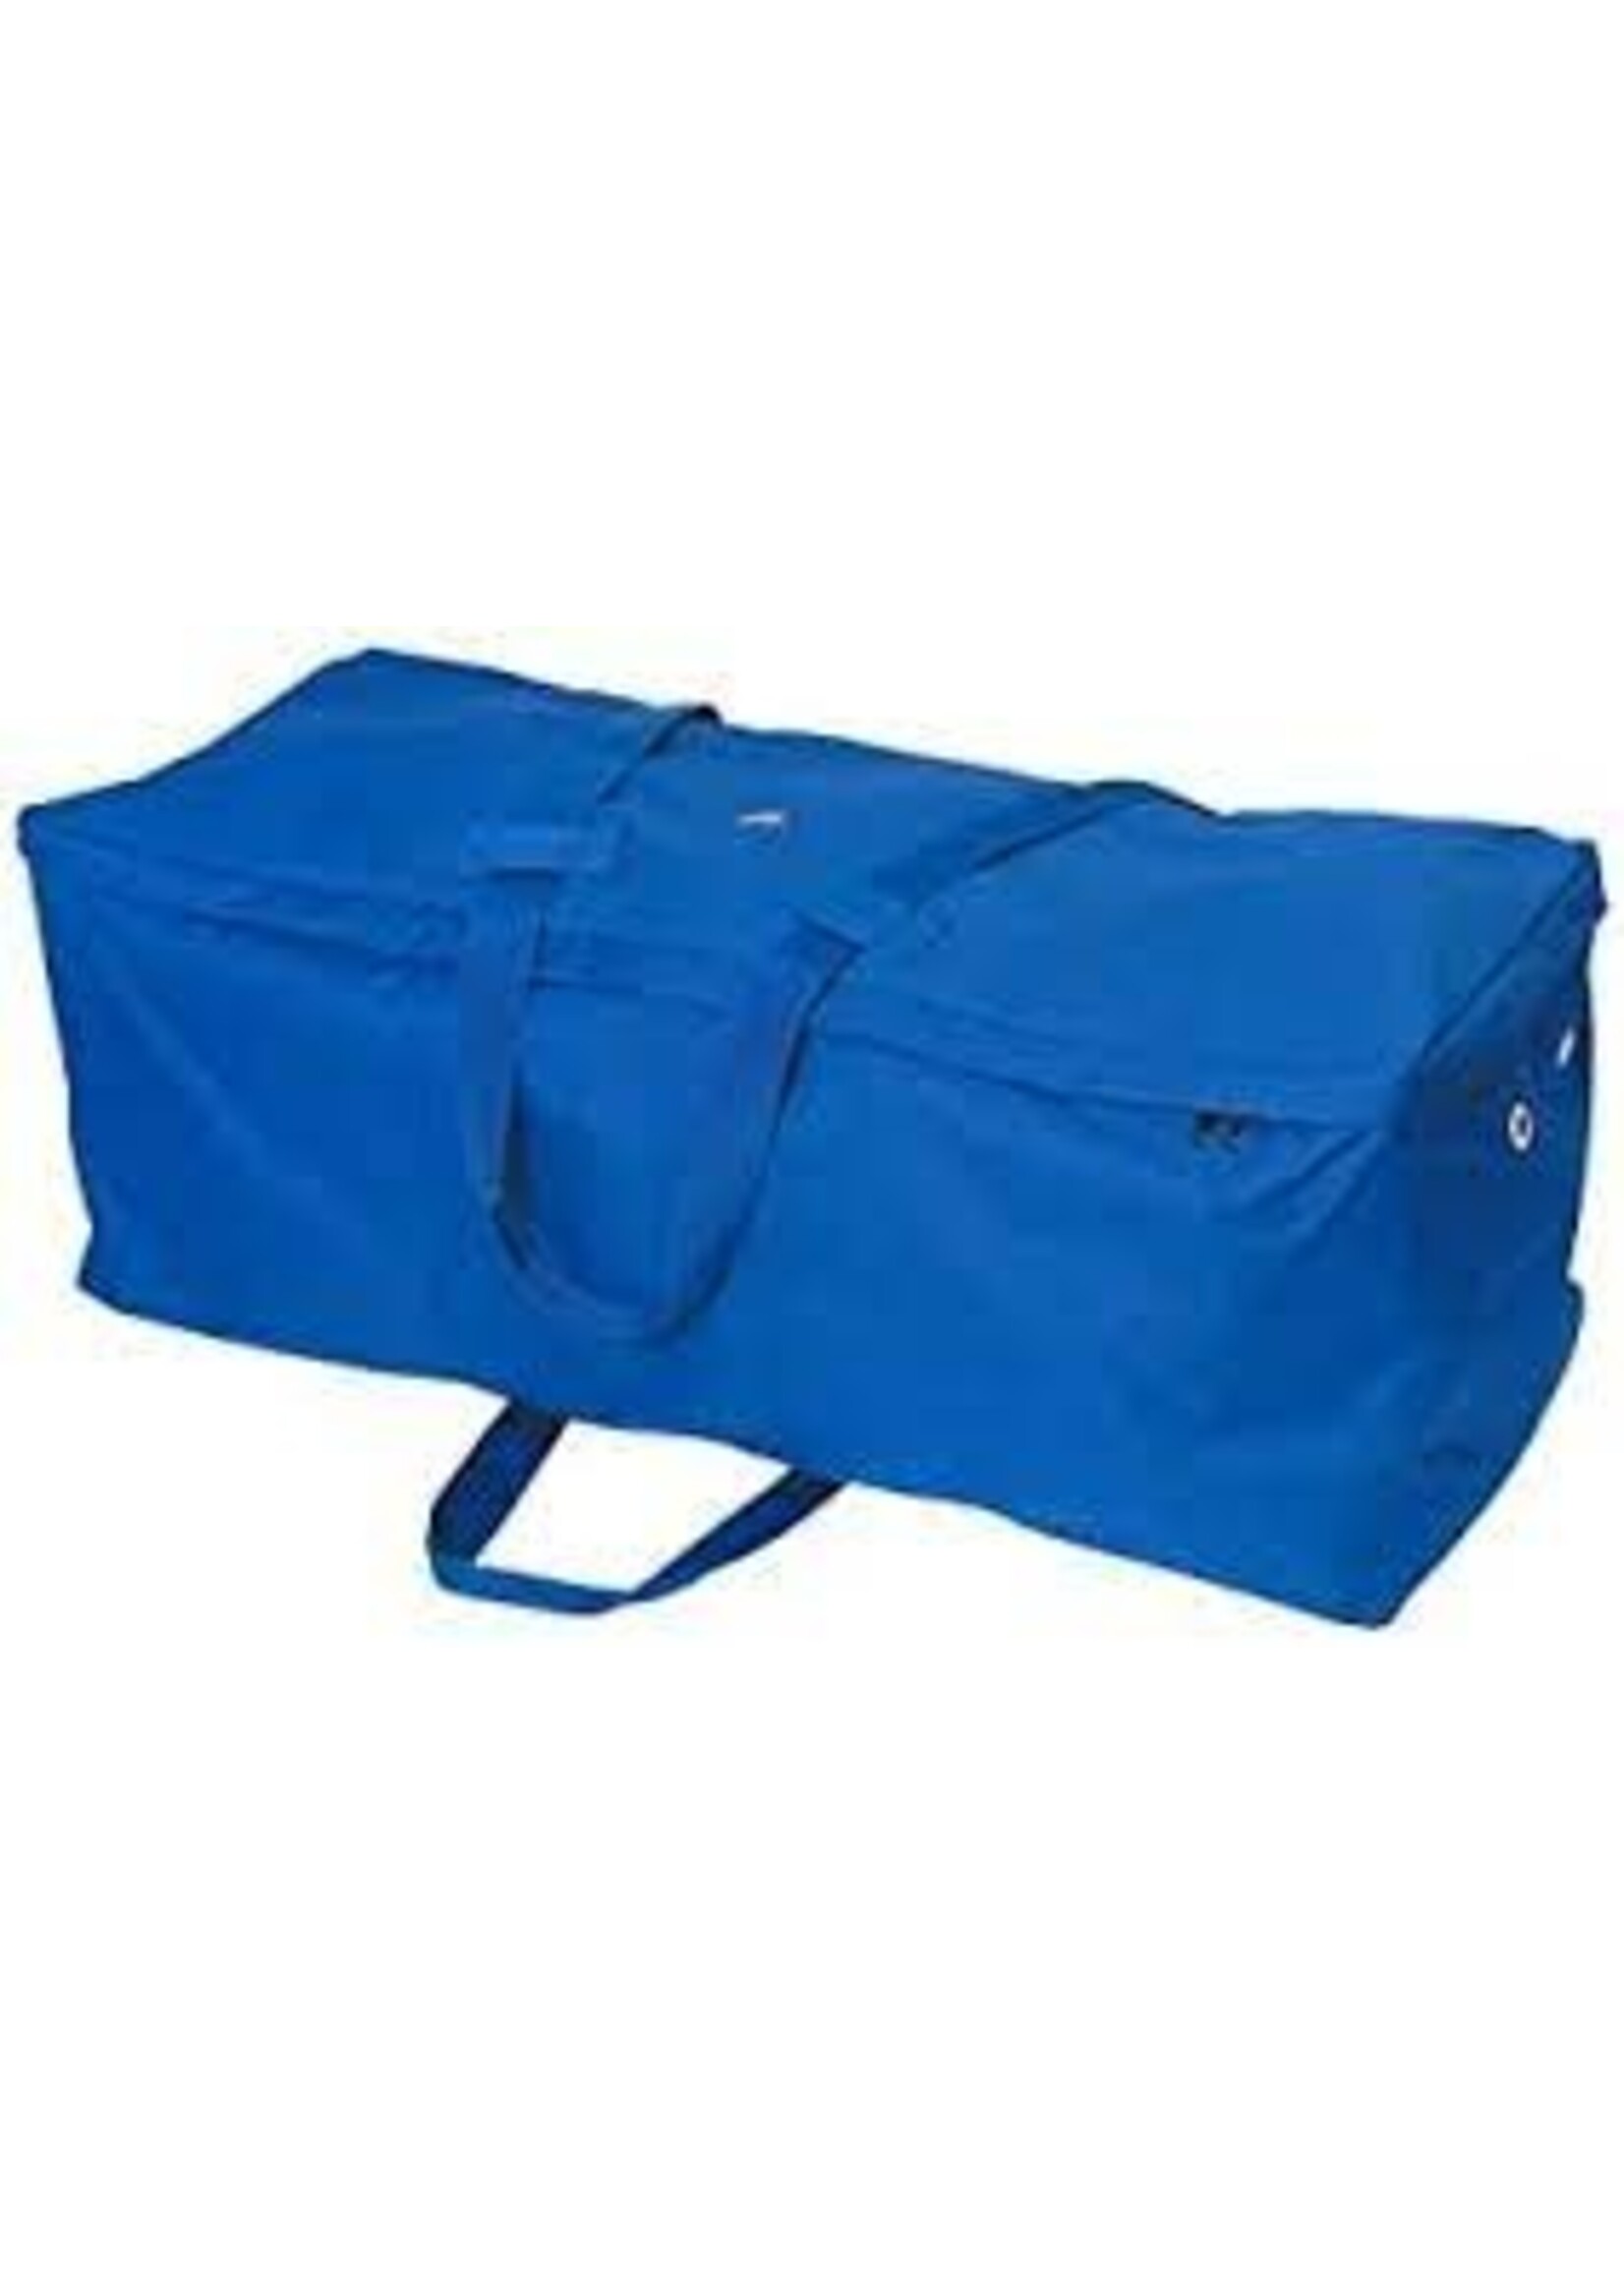 Tough 1 Hay Bale Bag/ Carrier -